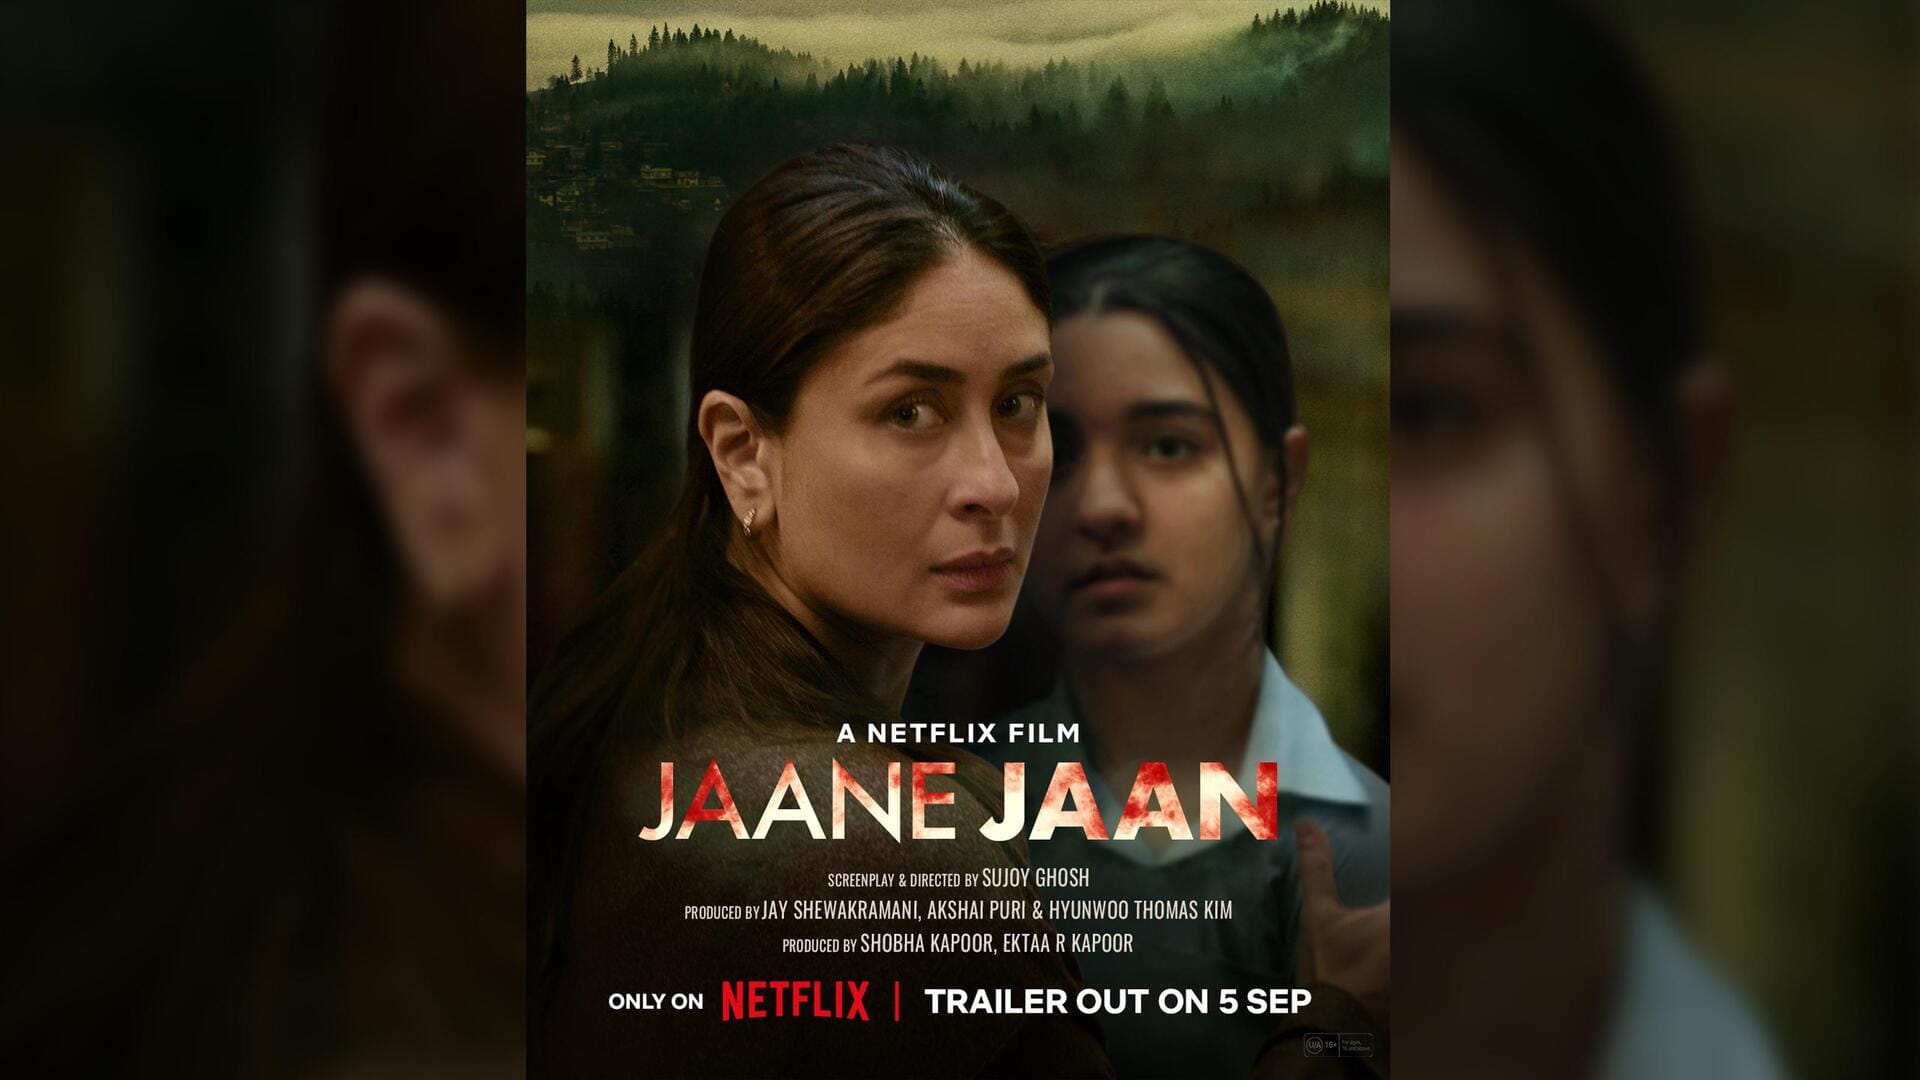 #JaaneJaan: Kareena Kapoor starrer's new poster unveiled, trailer out soon